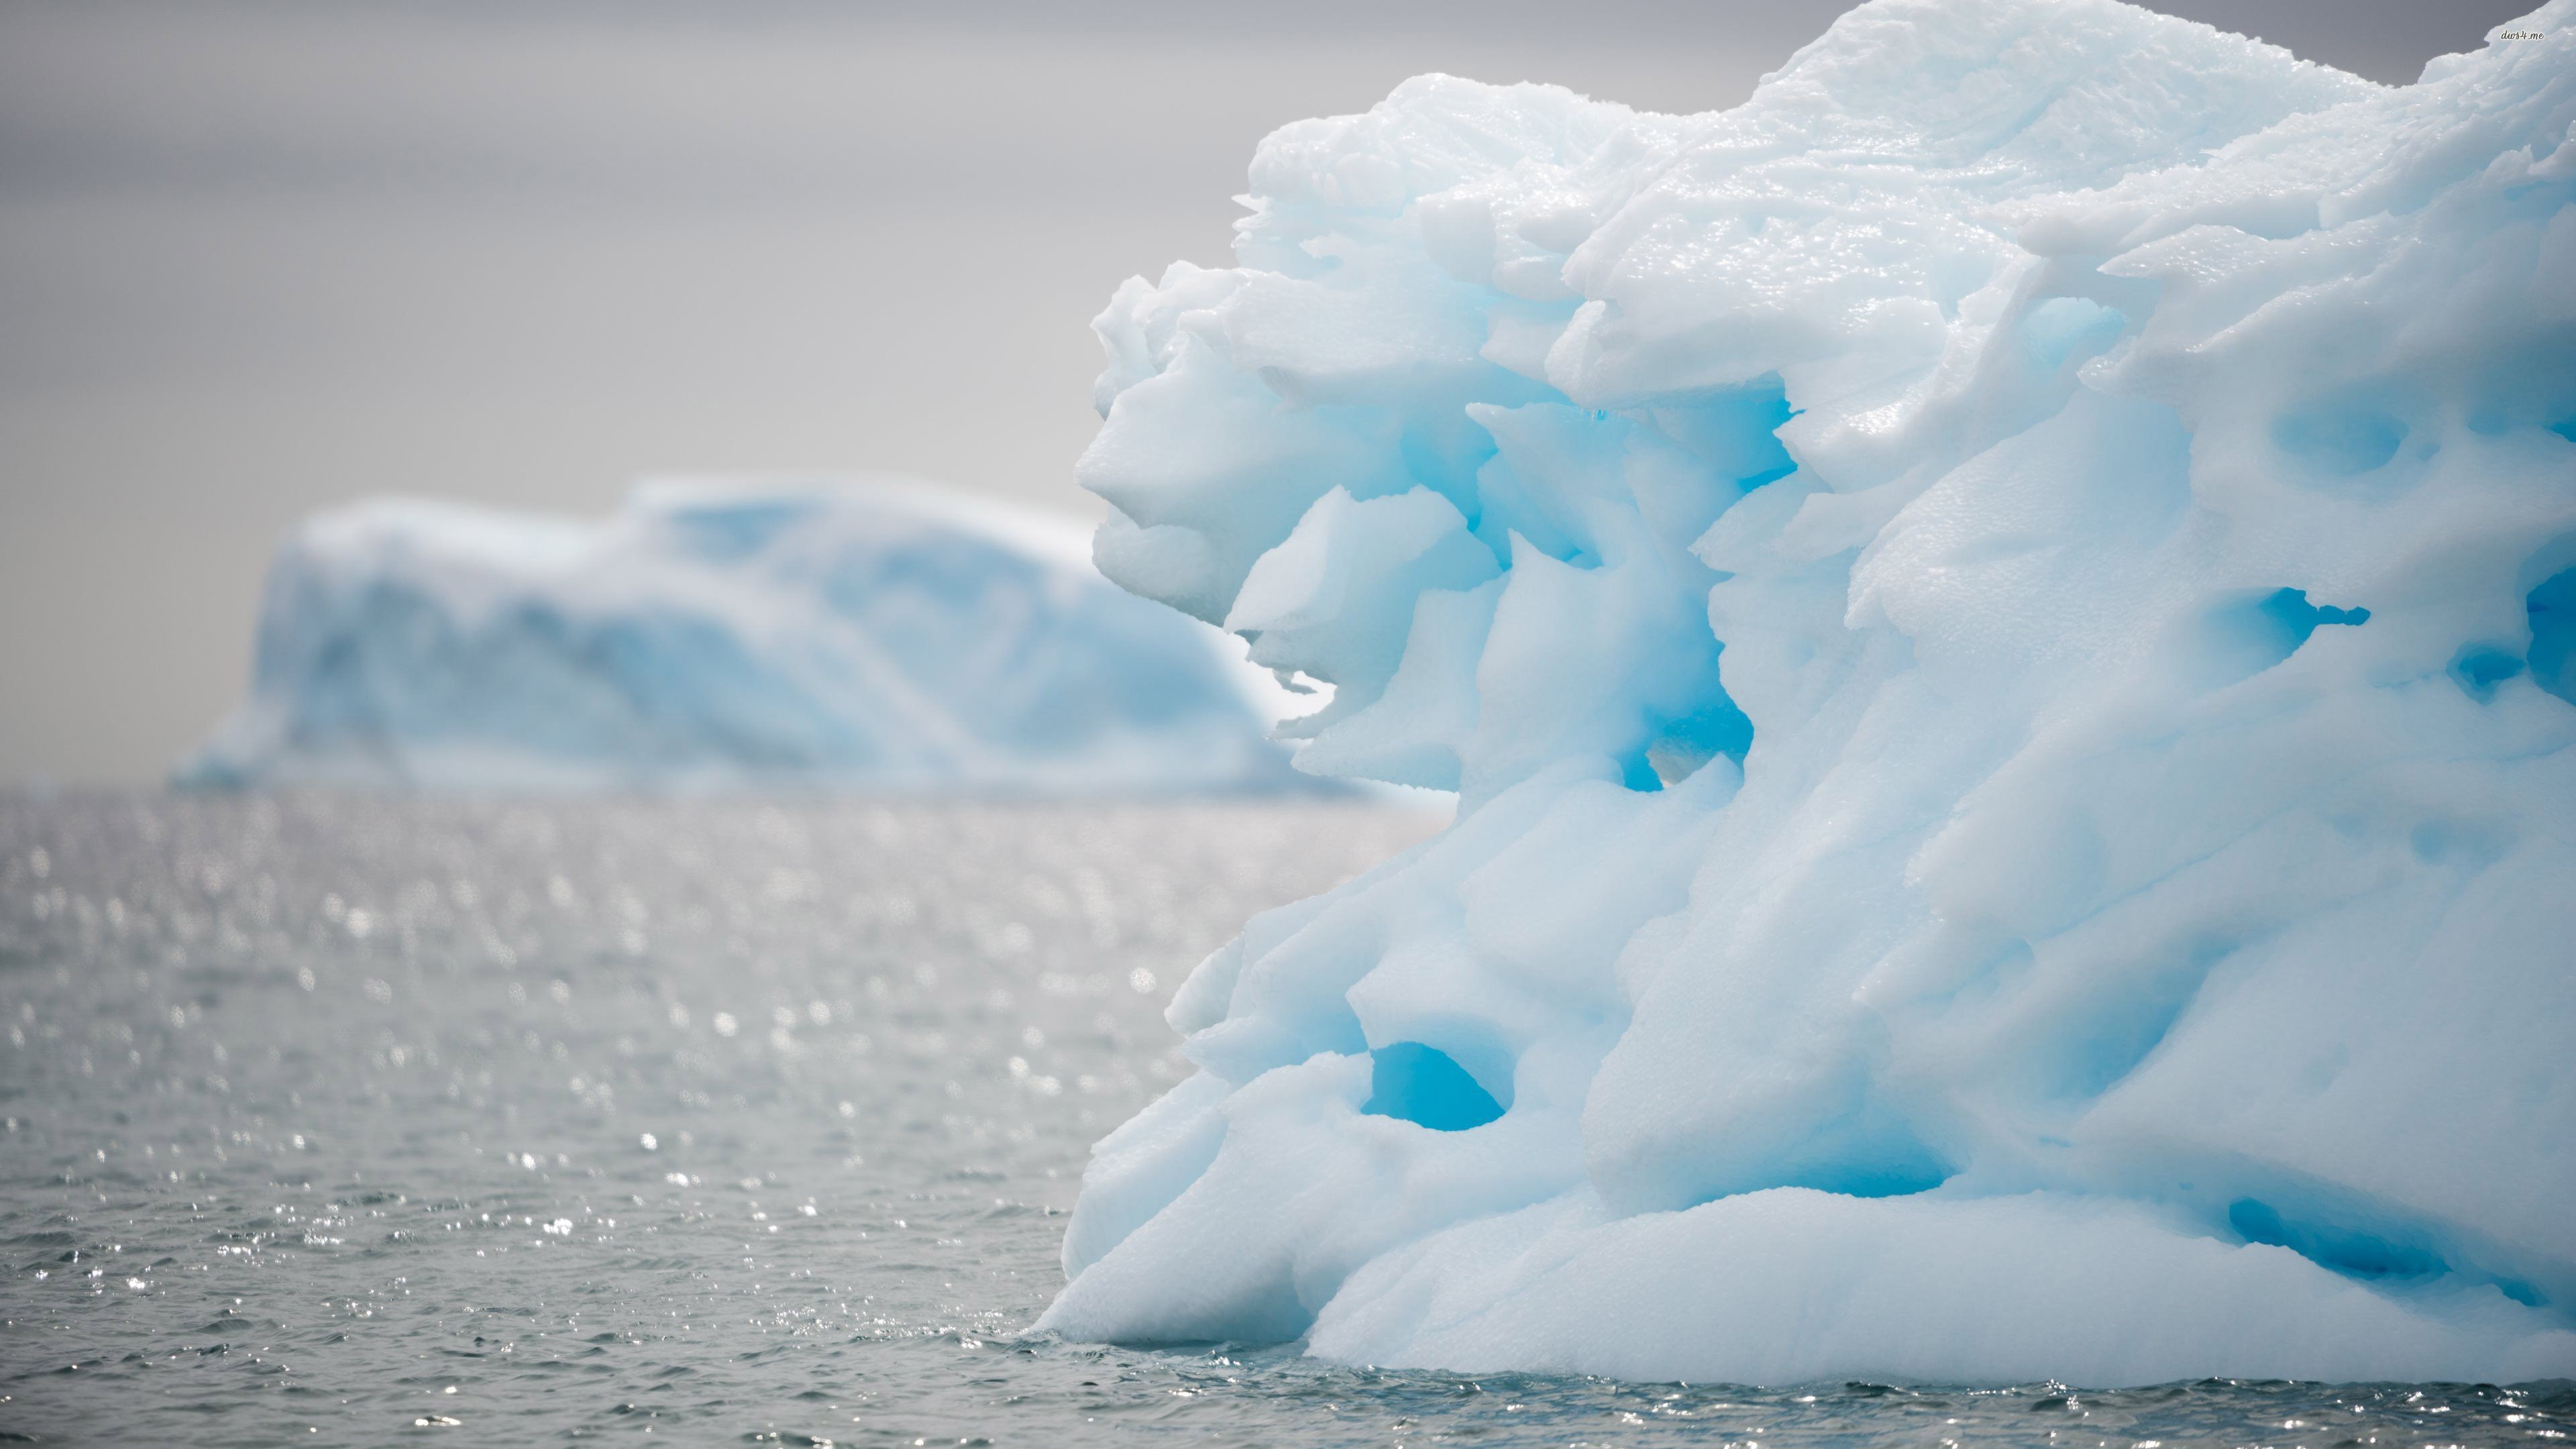 General 3840x2160 nature water sea ice iceberg glacier blue sunlight depth of field